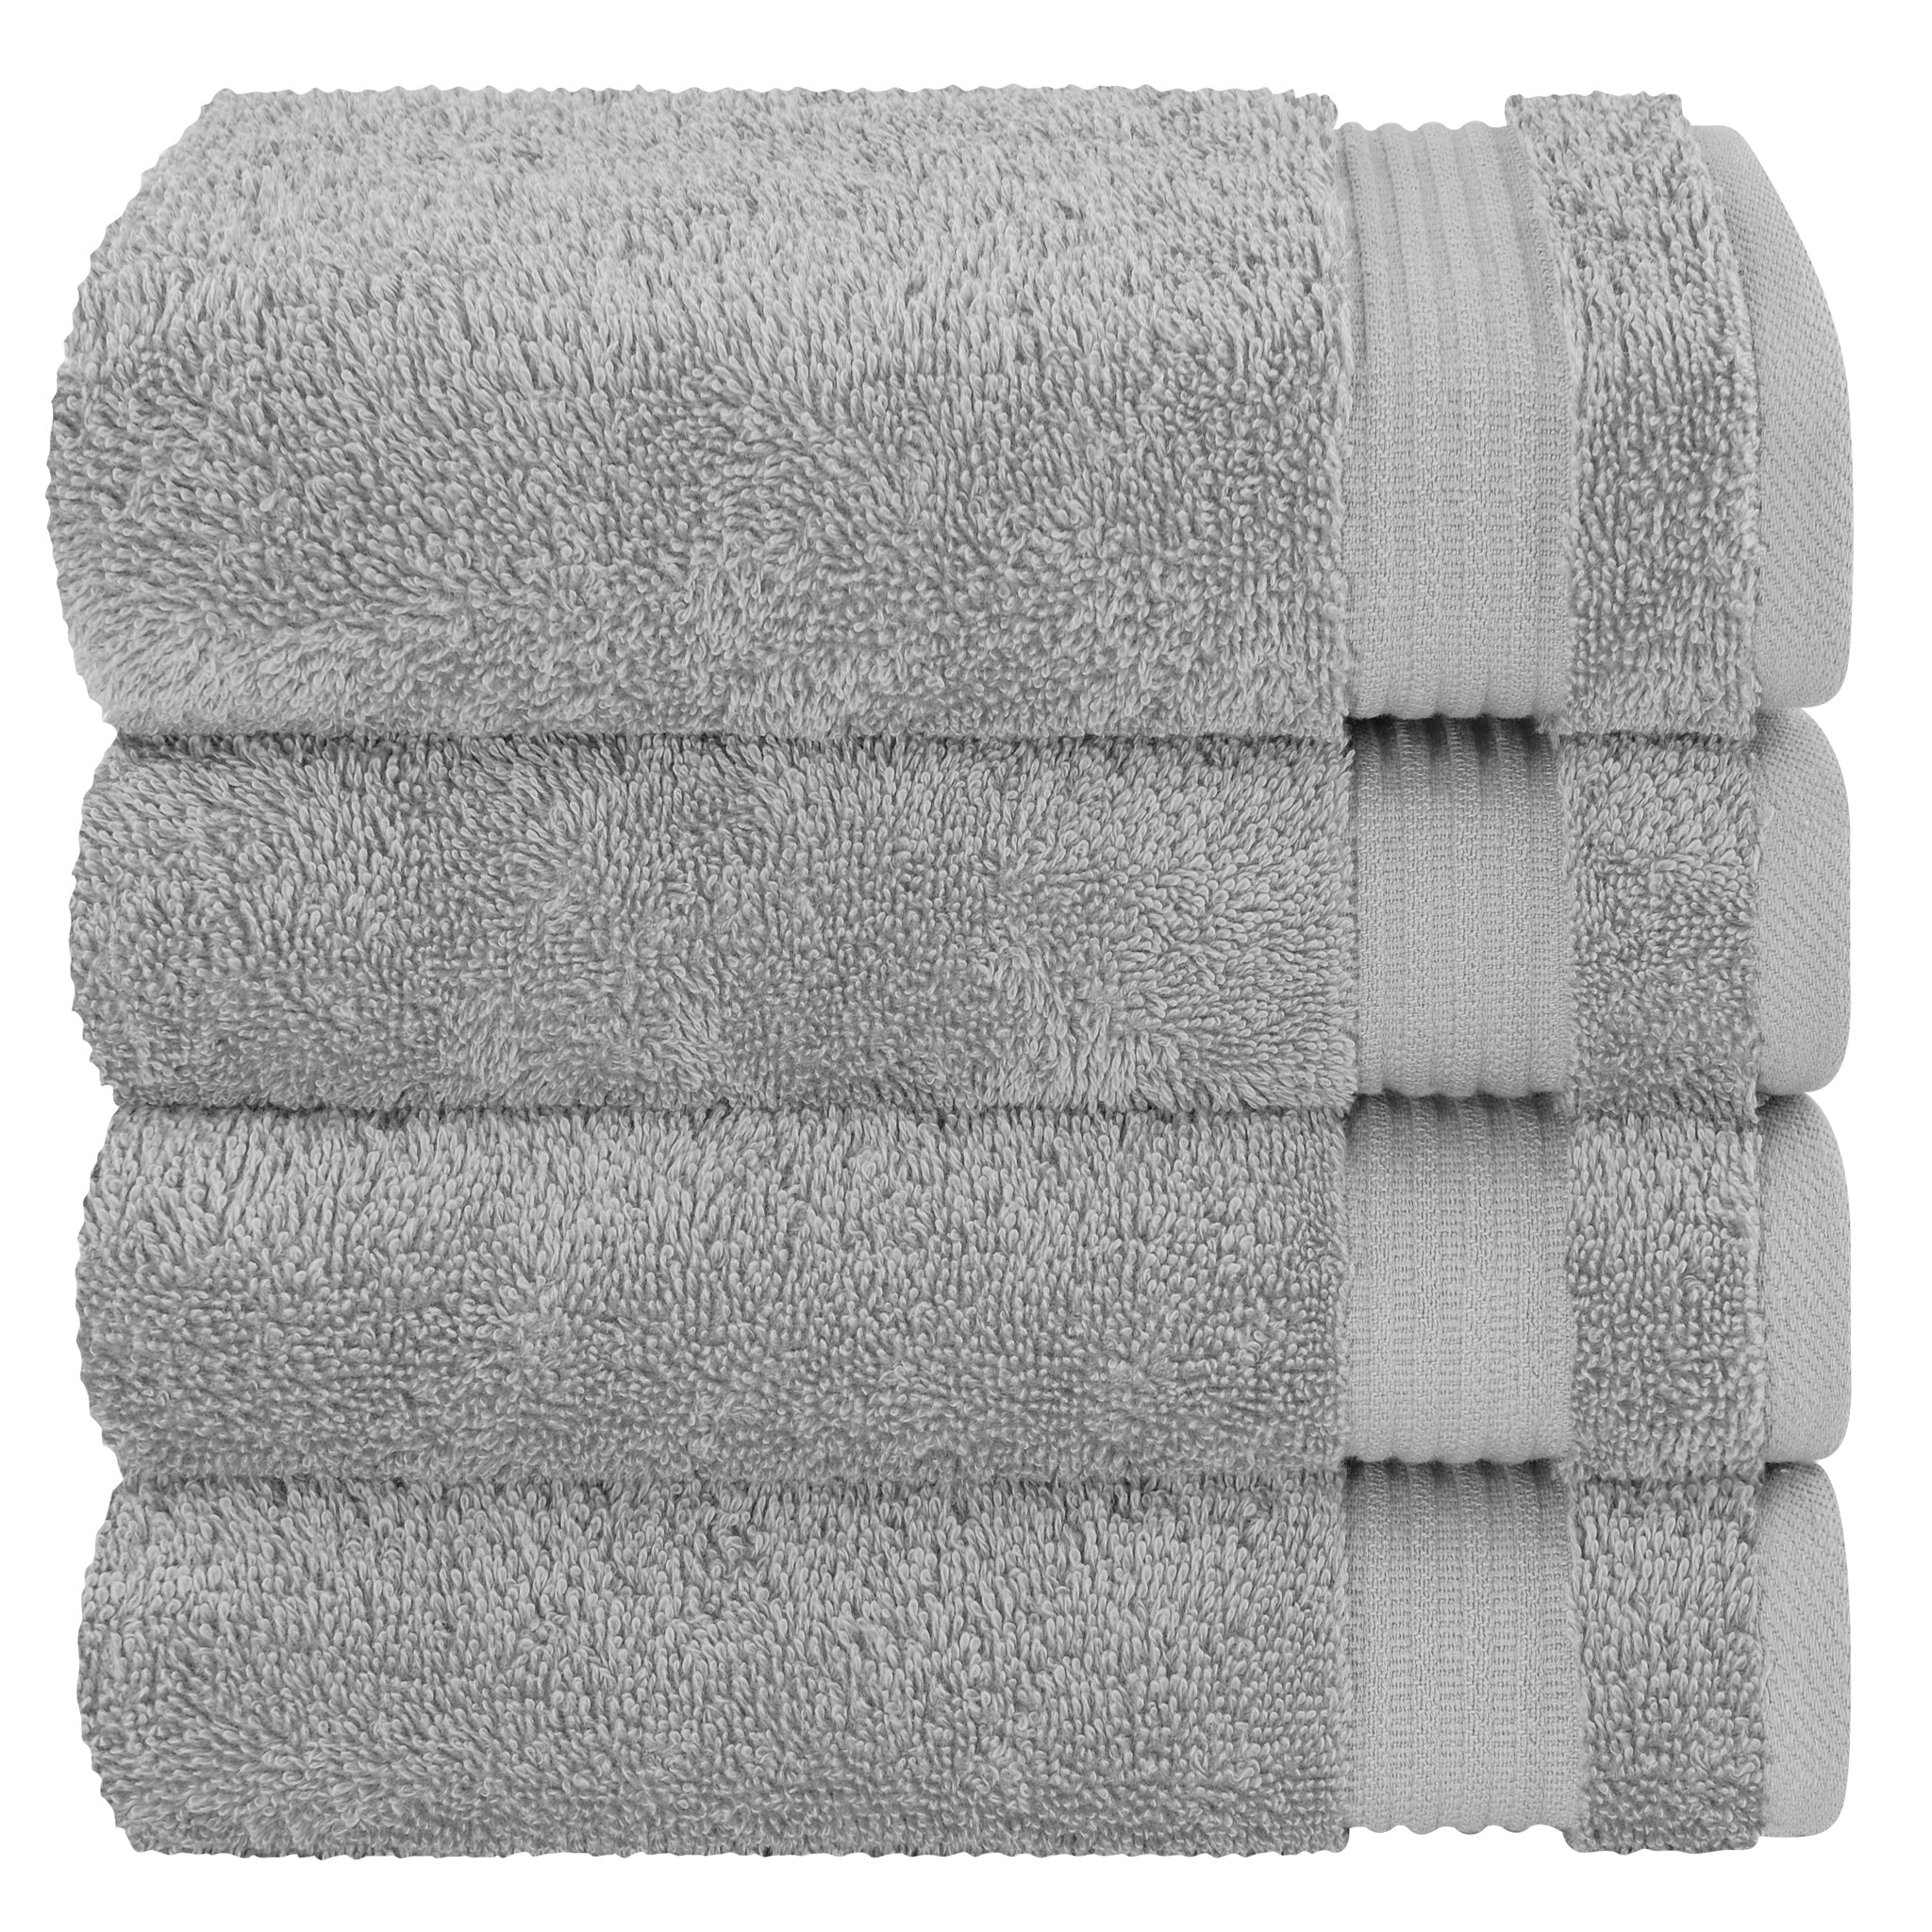 American Soft Linen Bekos 100% Cotton Turkish Towels, 4 Piece Hand Towel Set -rockridge-gray-05